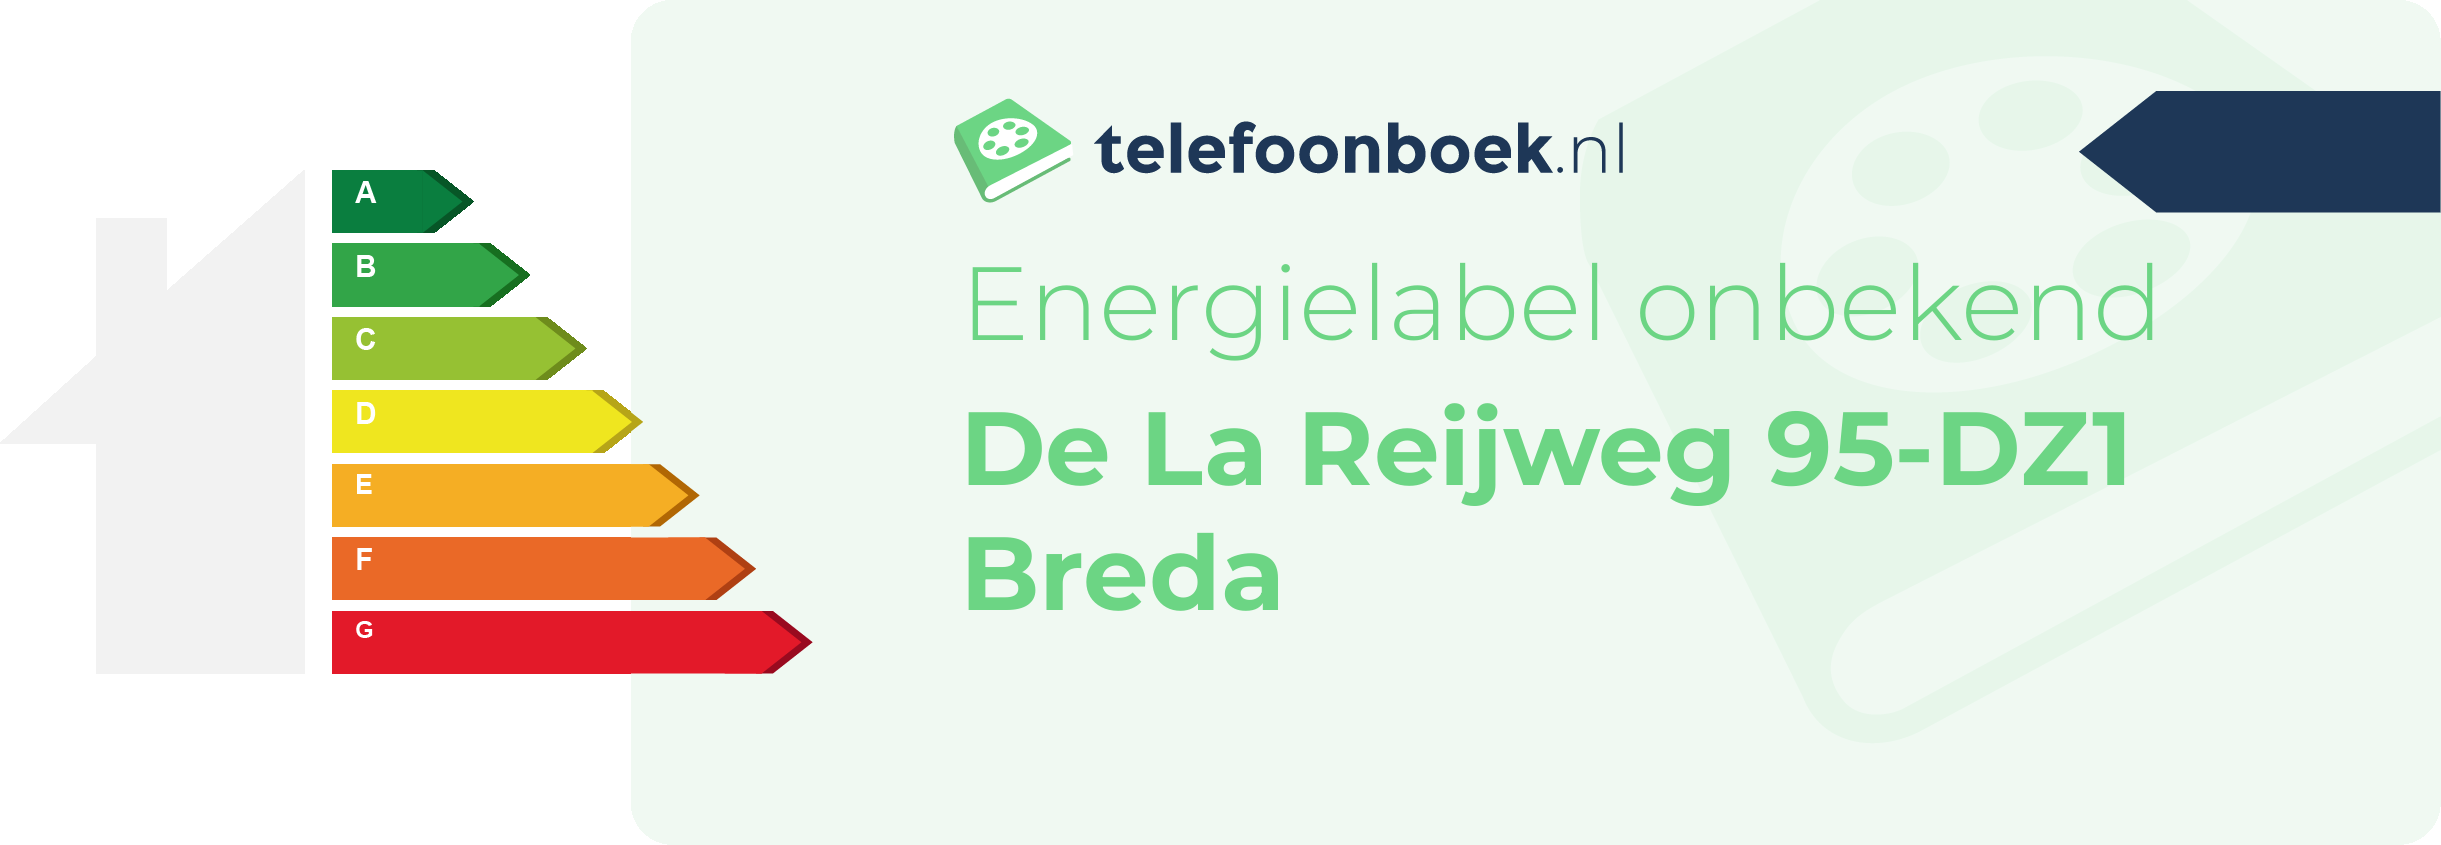 Energielabel De La Reijweg 95-DZ1 Breda